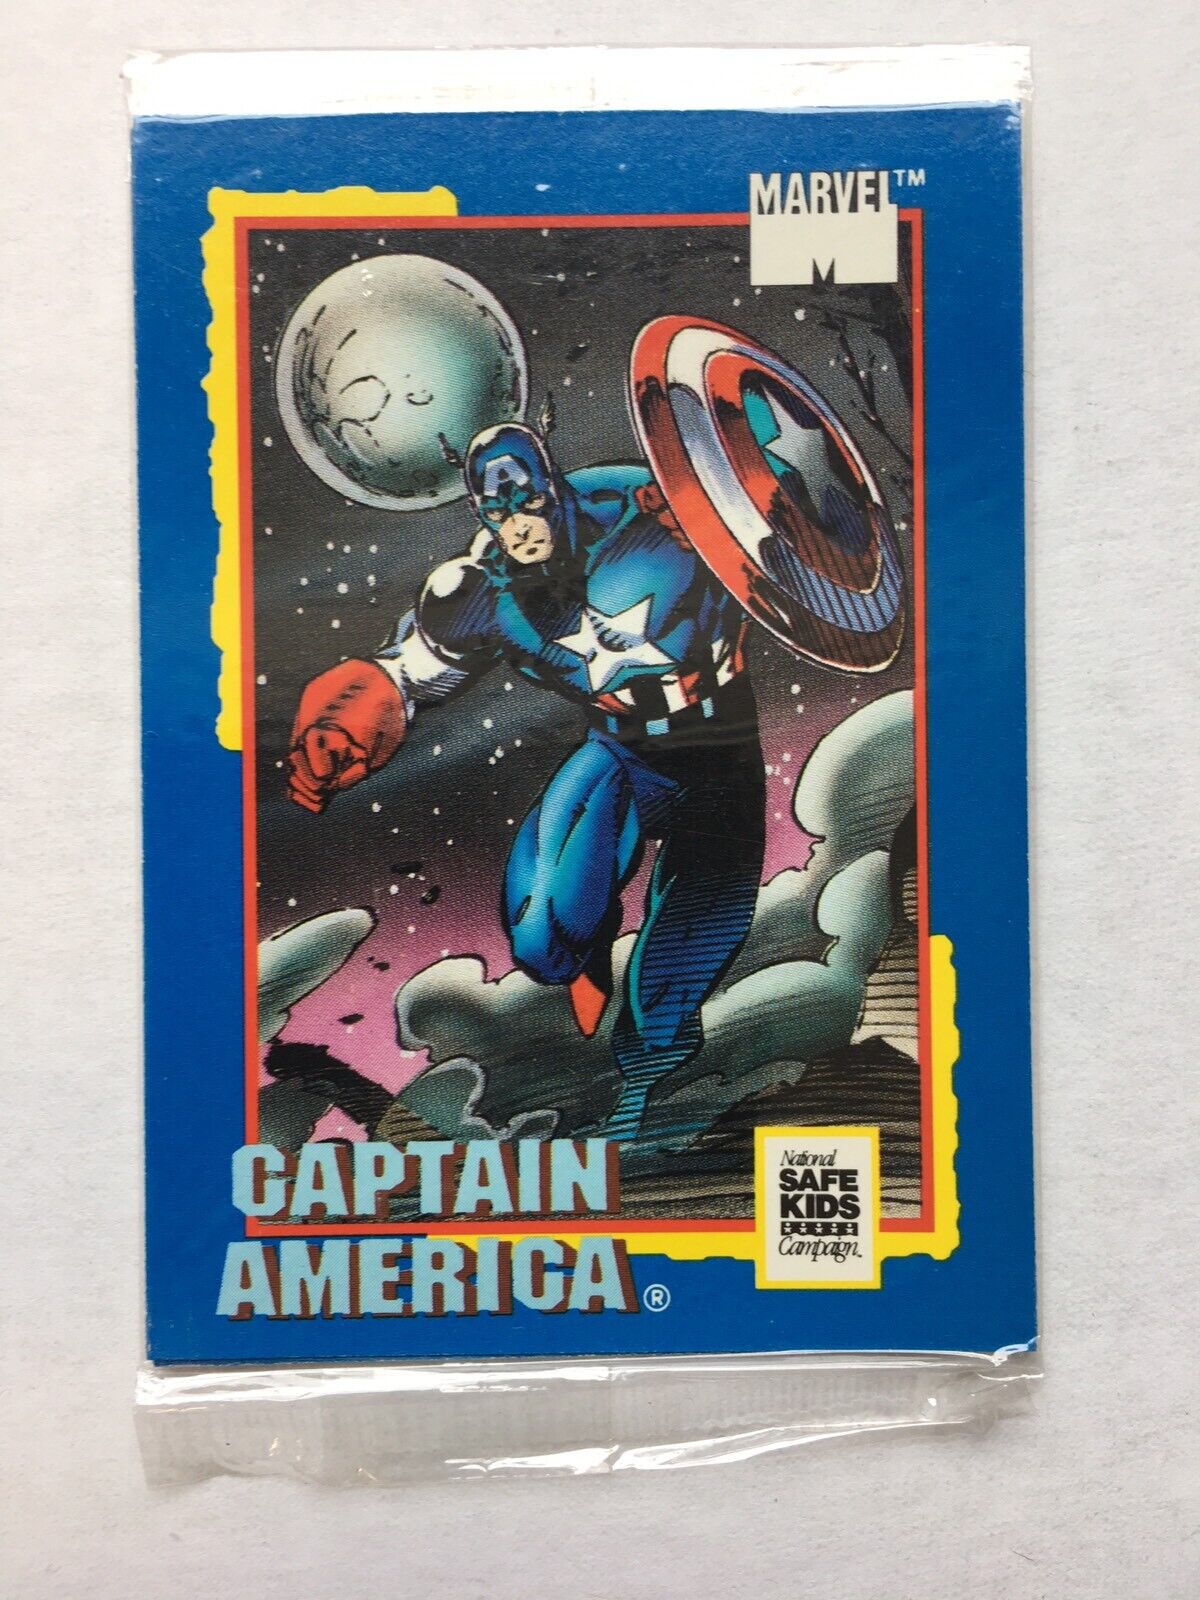 Captain America 1991 Marvel Universe National Safe Kids Day Pack of 3 - UNOPENED